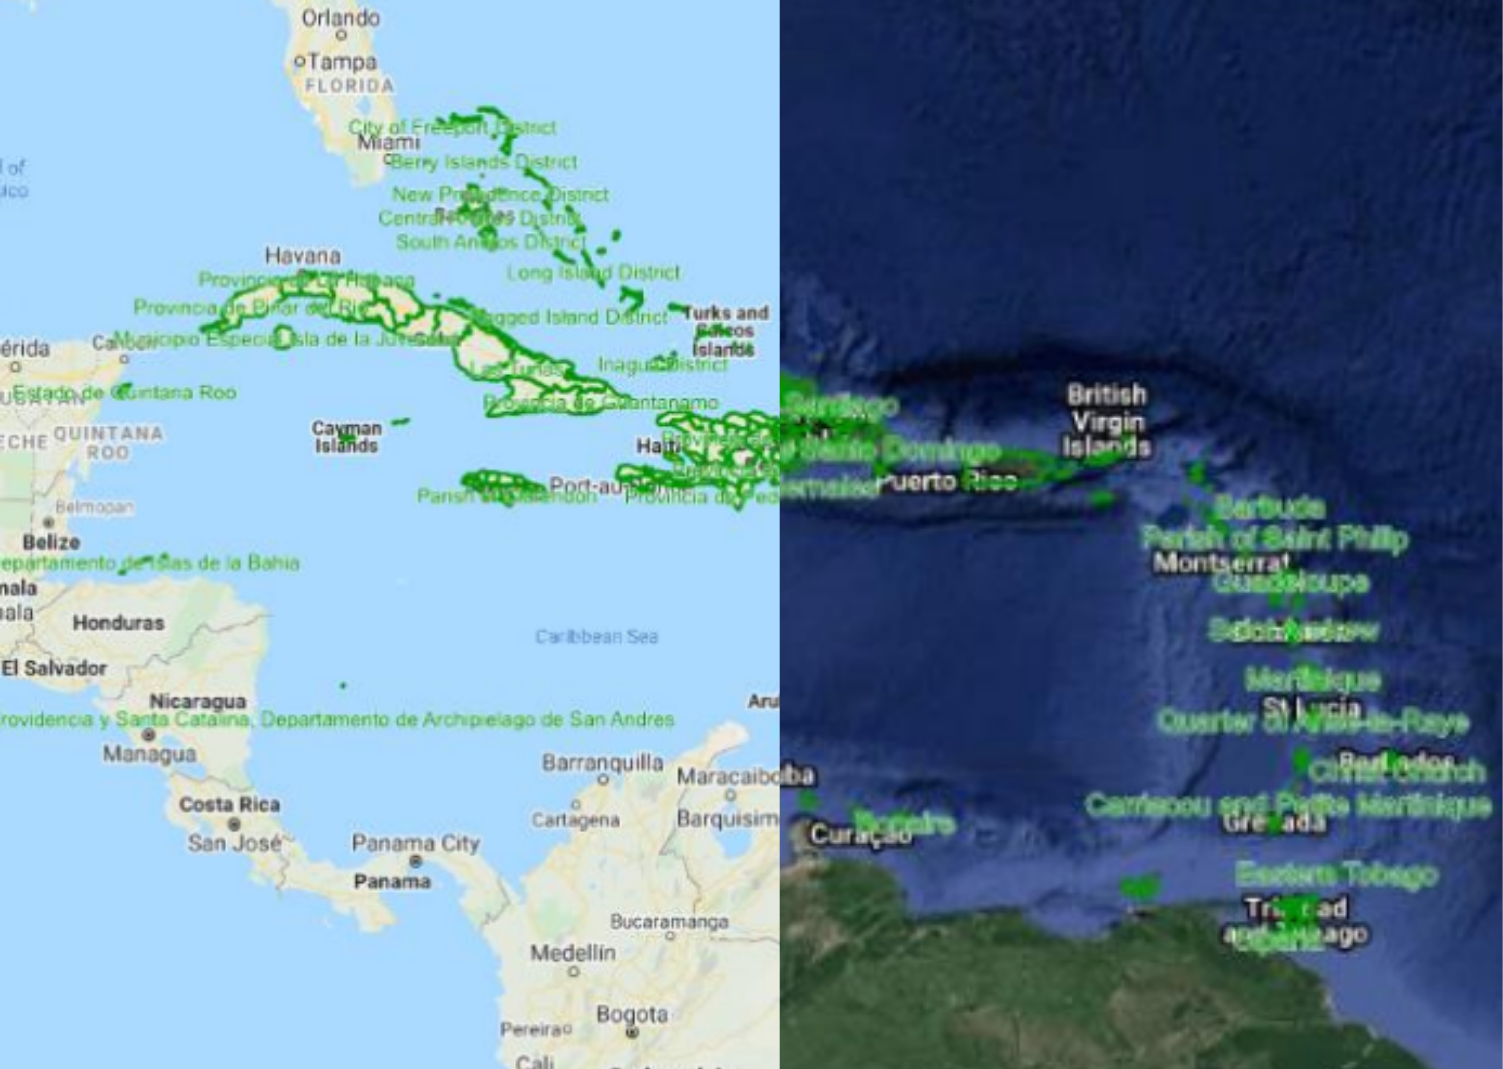 The Caribbean Regions